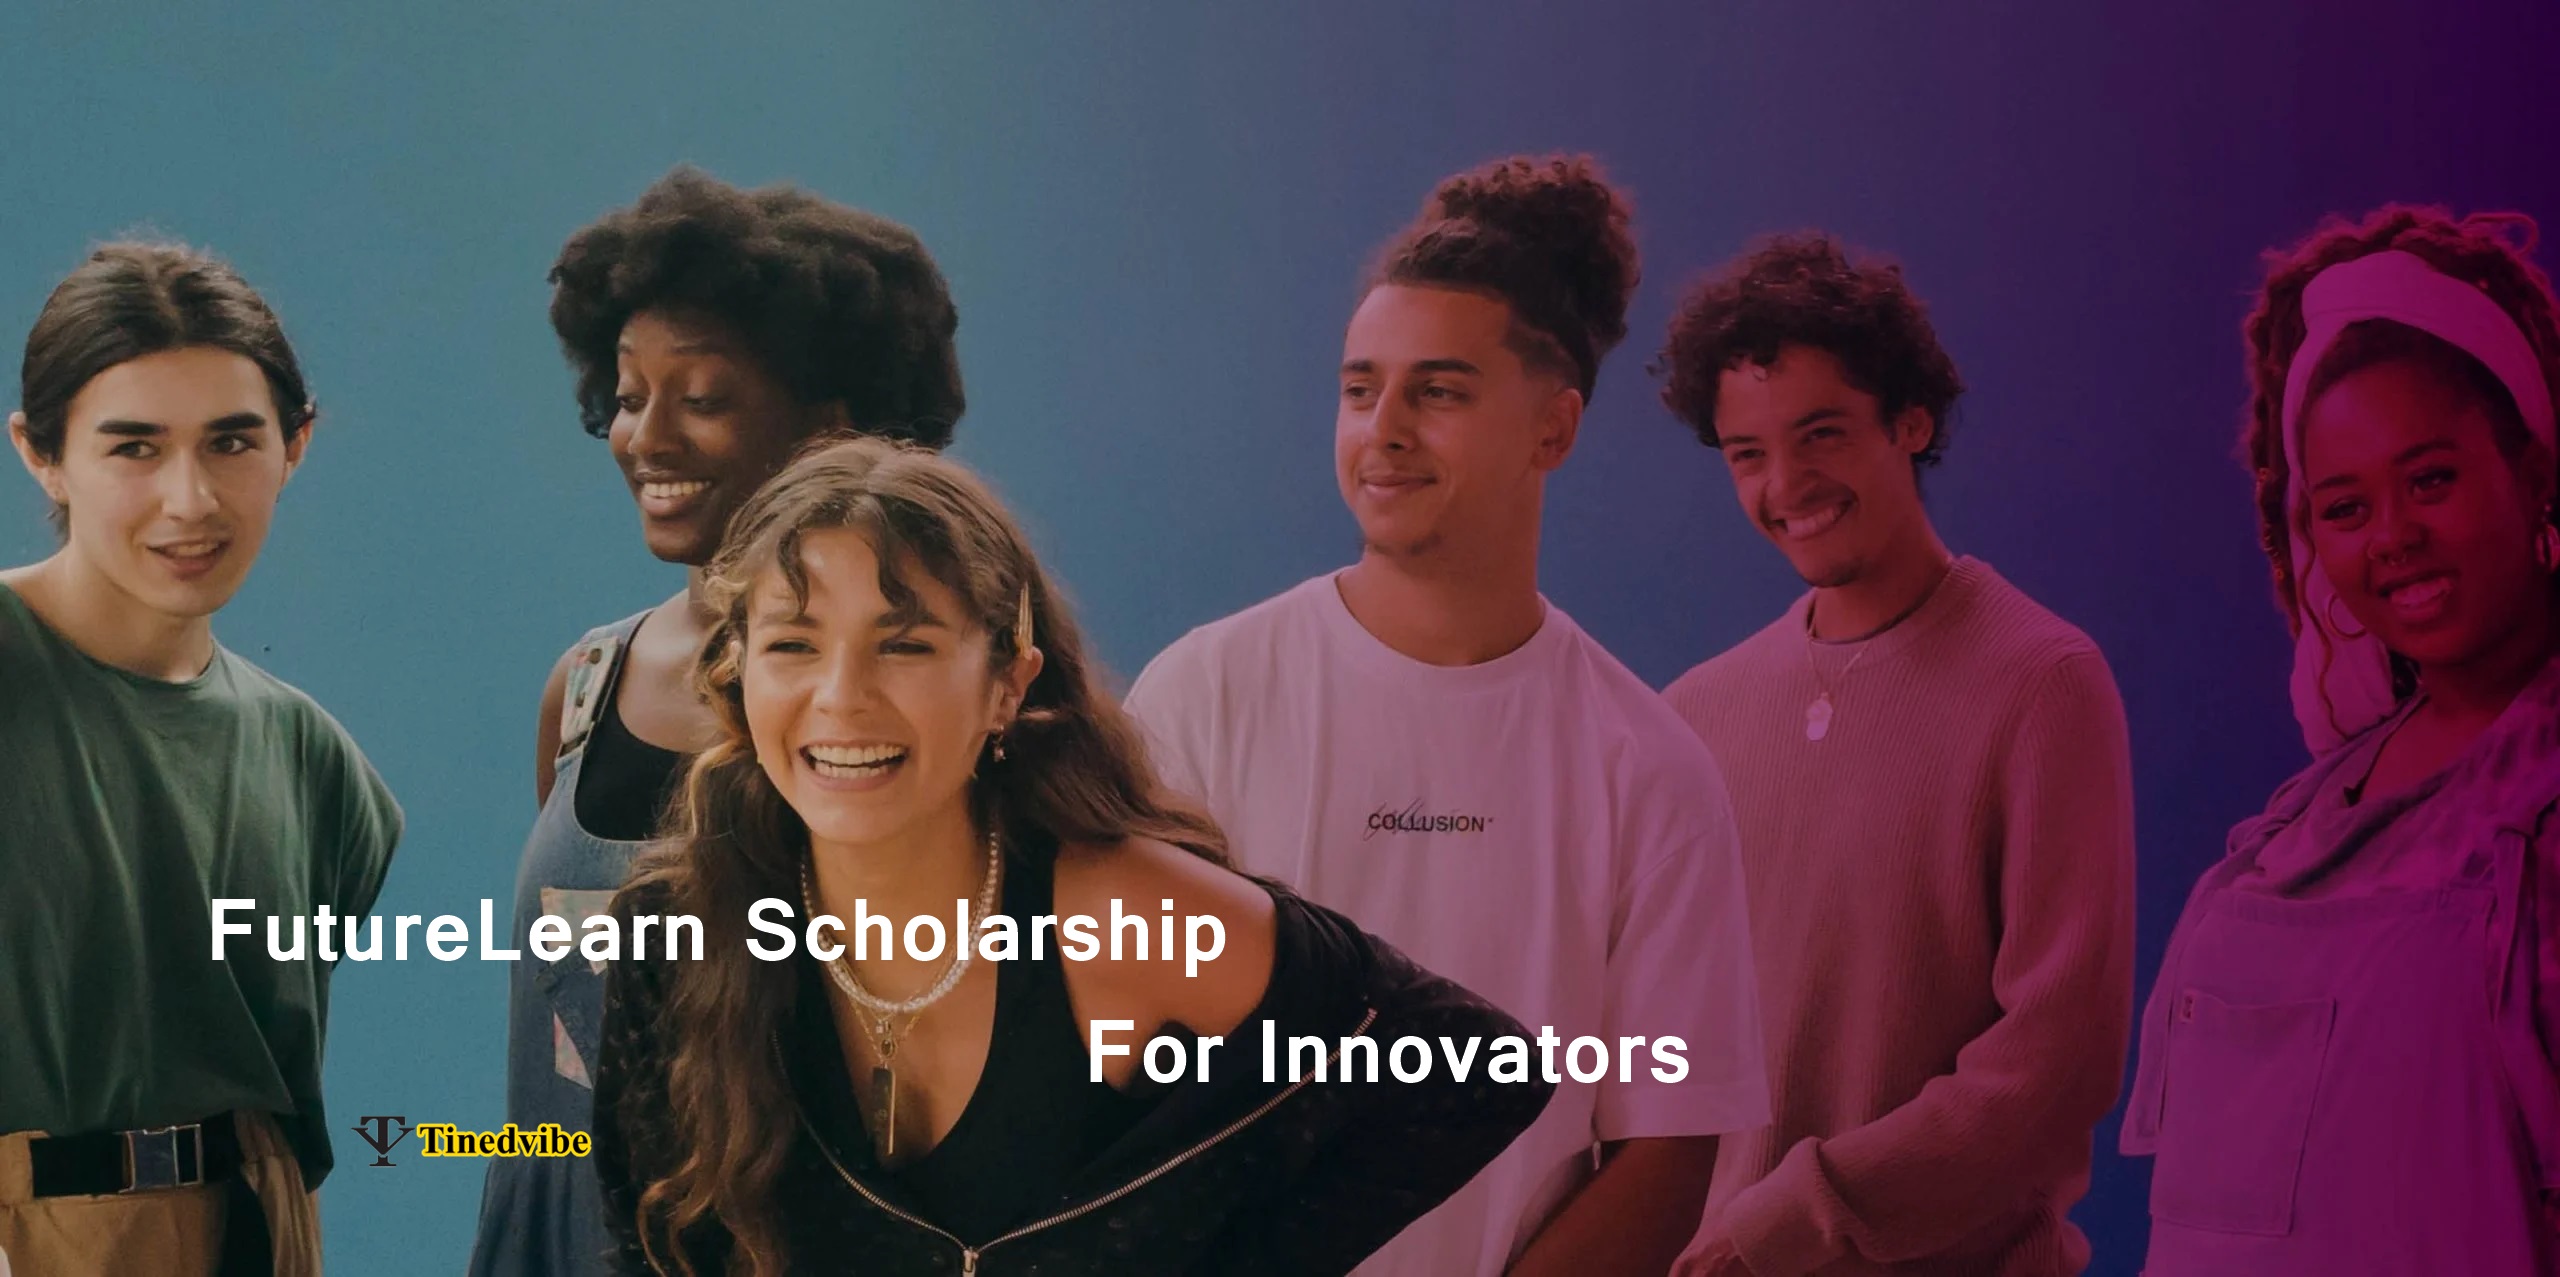 FutureLearn Scholarship for Innovators